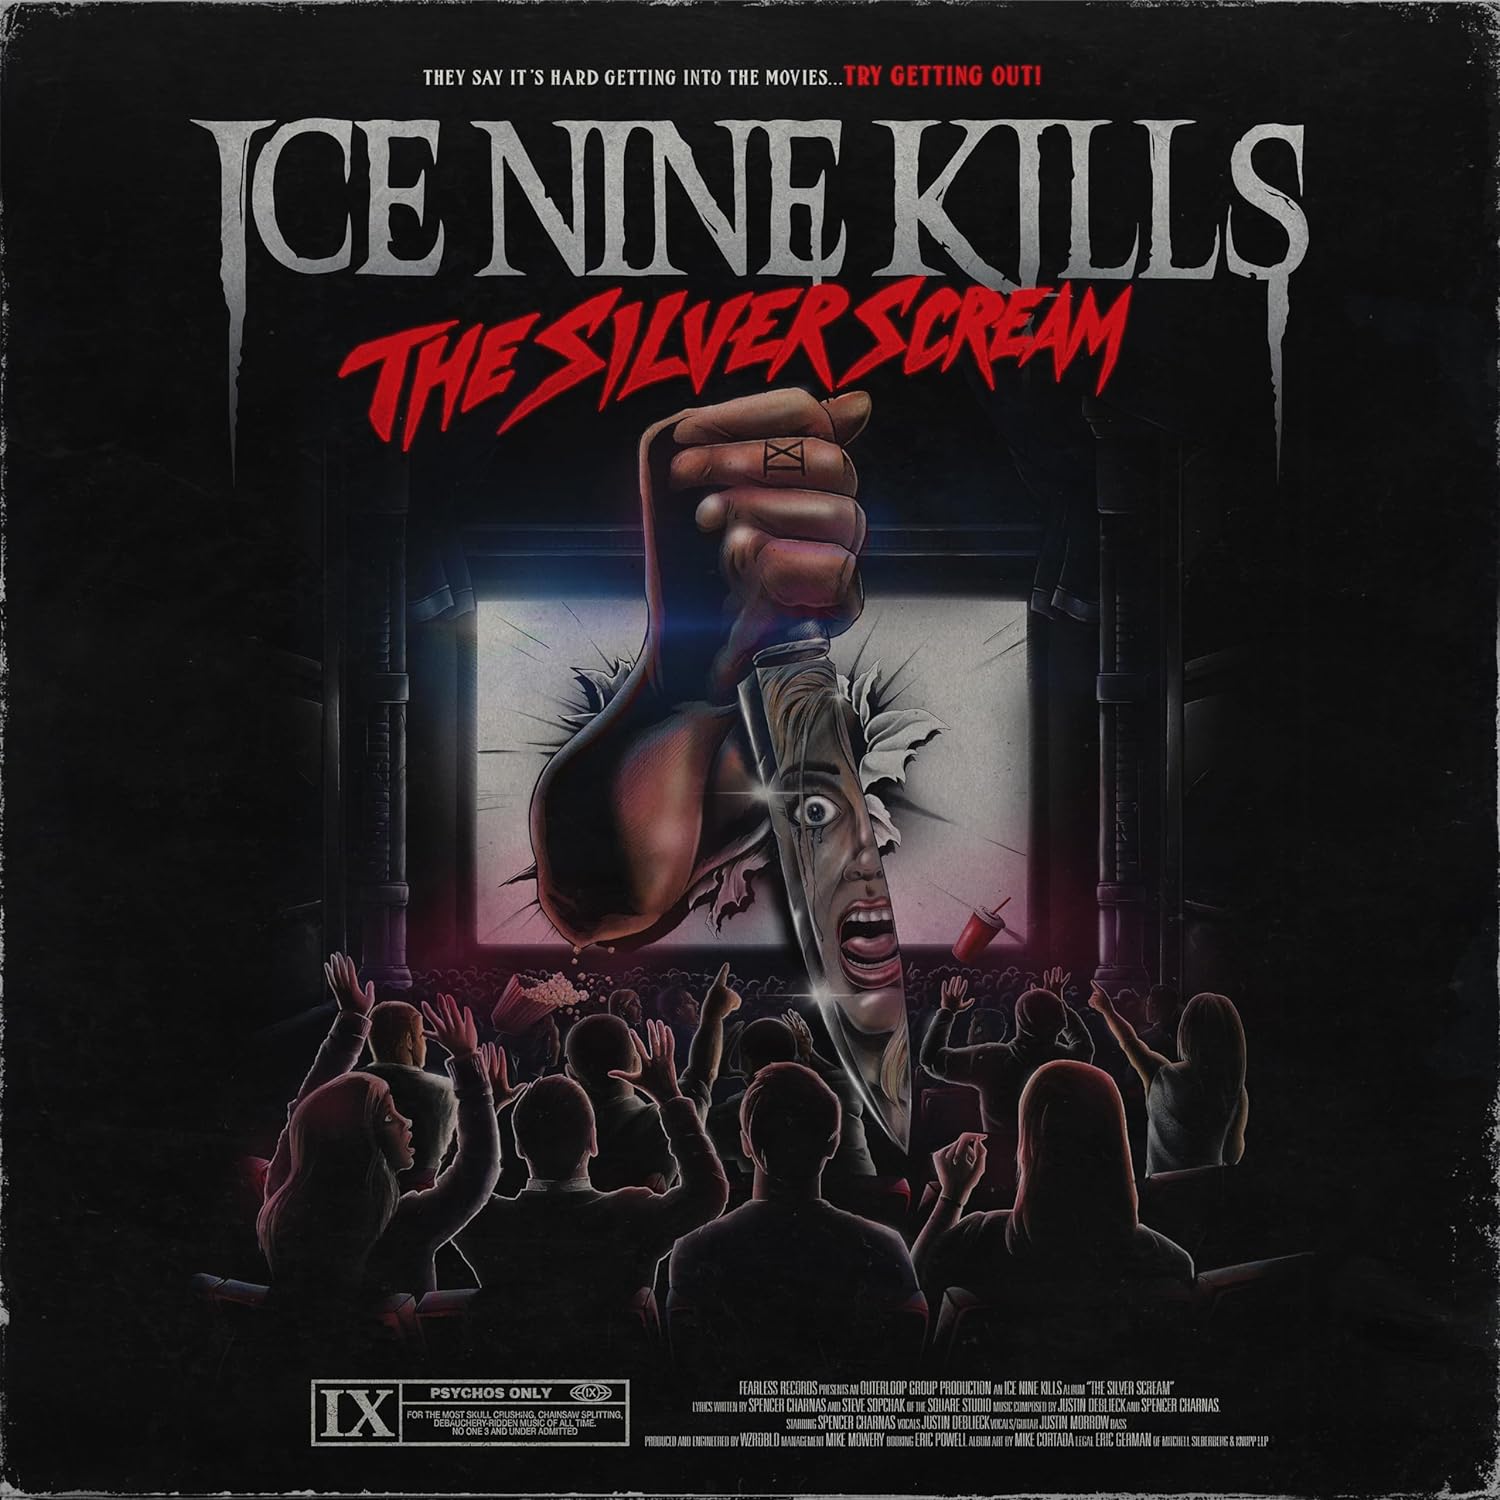 Ice Nine Kills "The Silver Scream" Bloodshot Vinyl - PRE-ORDER